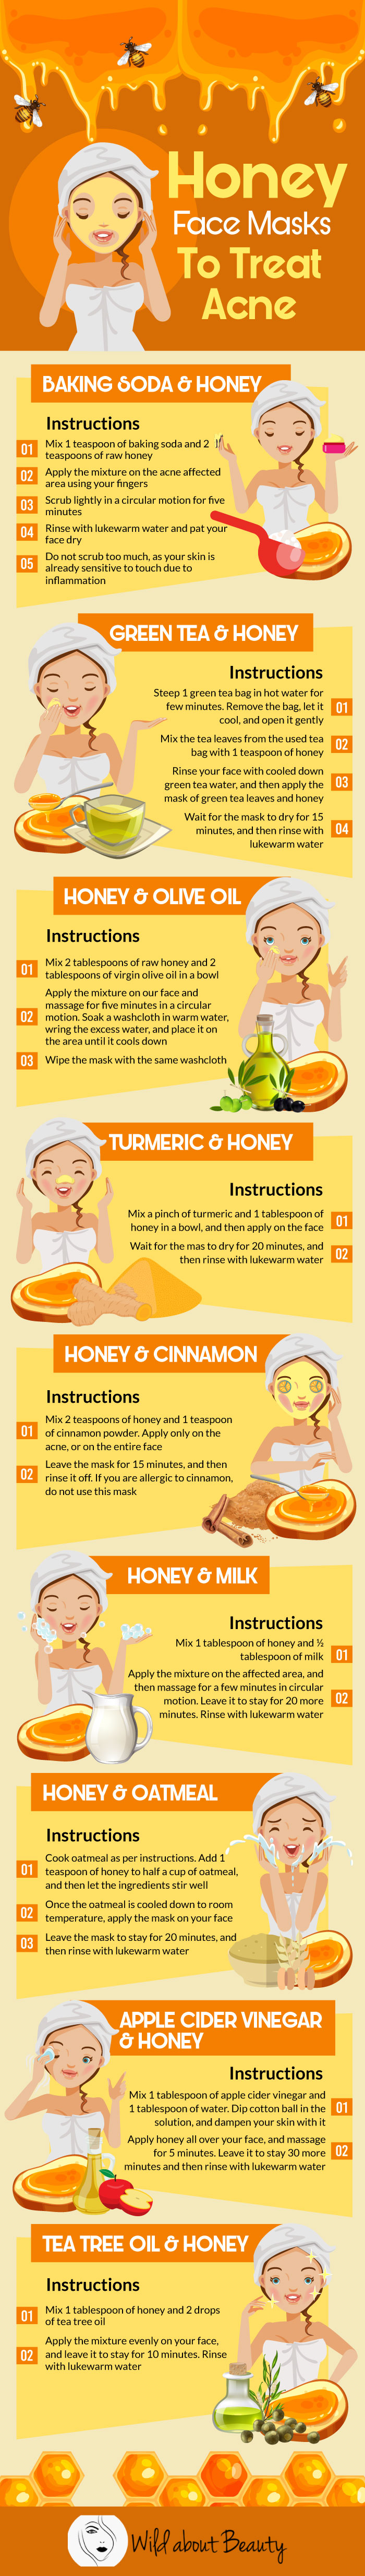 Honey Face Mask Recipes for Acne